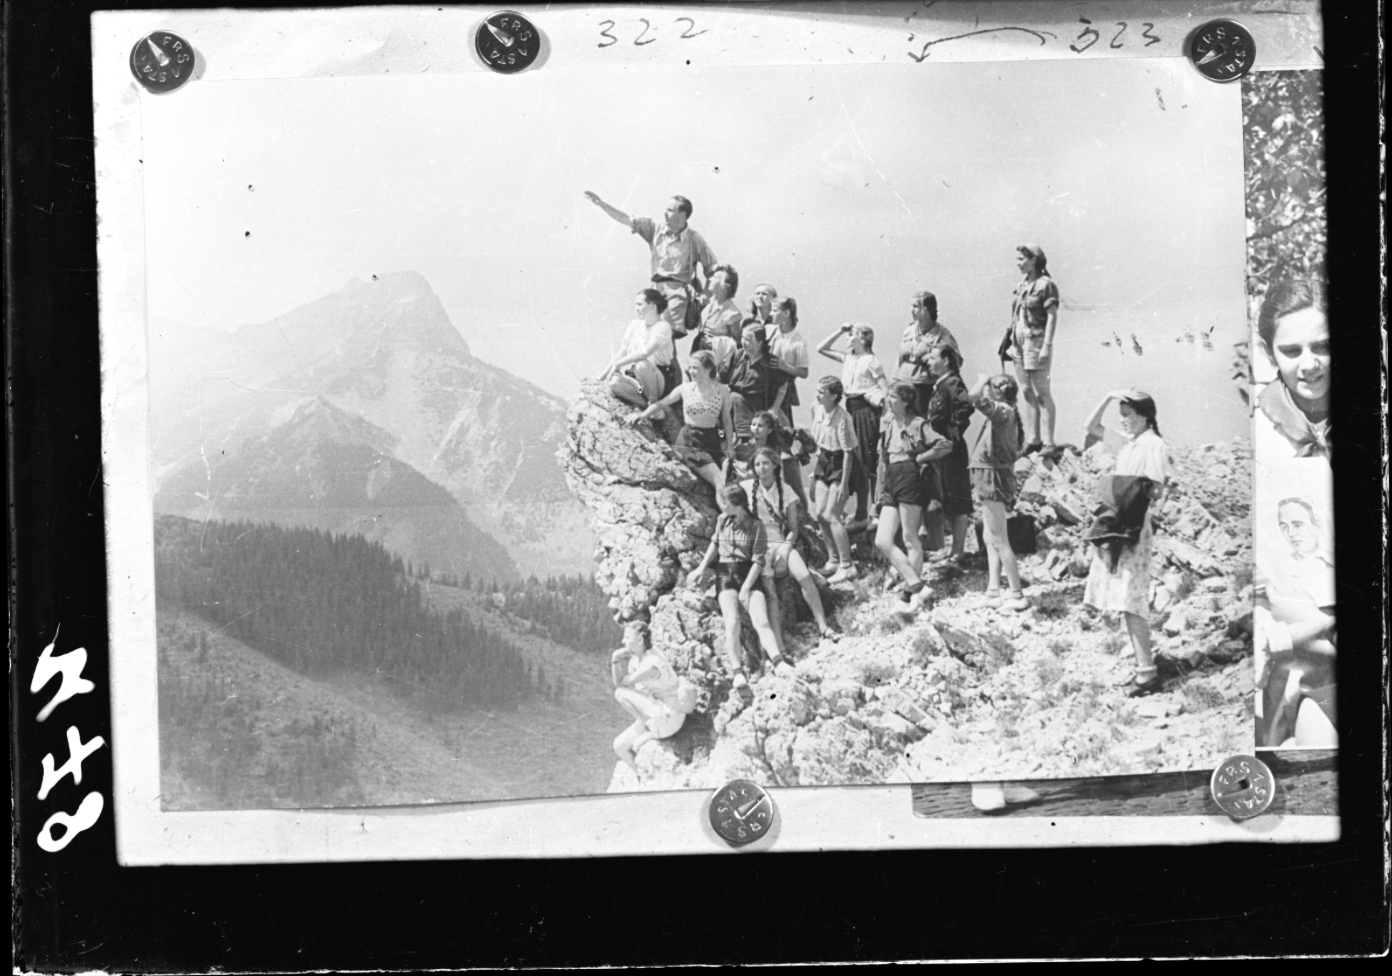 Mountain hikers 1945-55